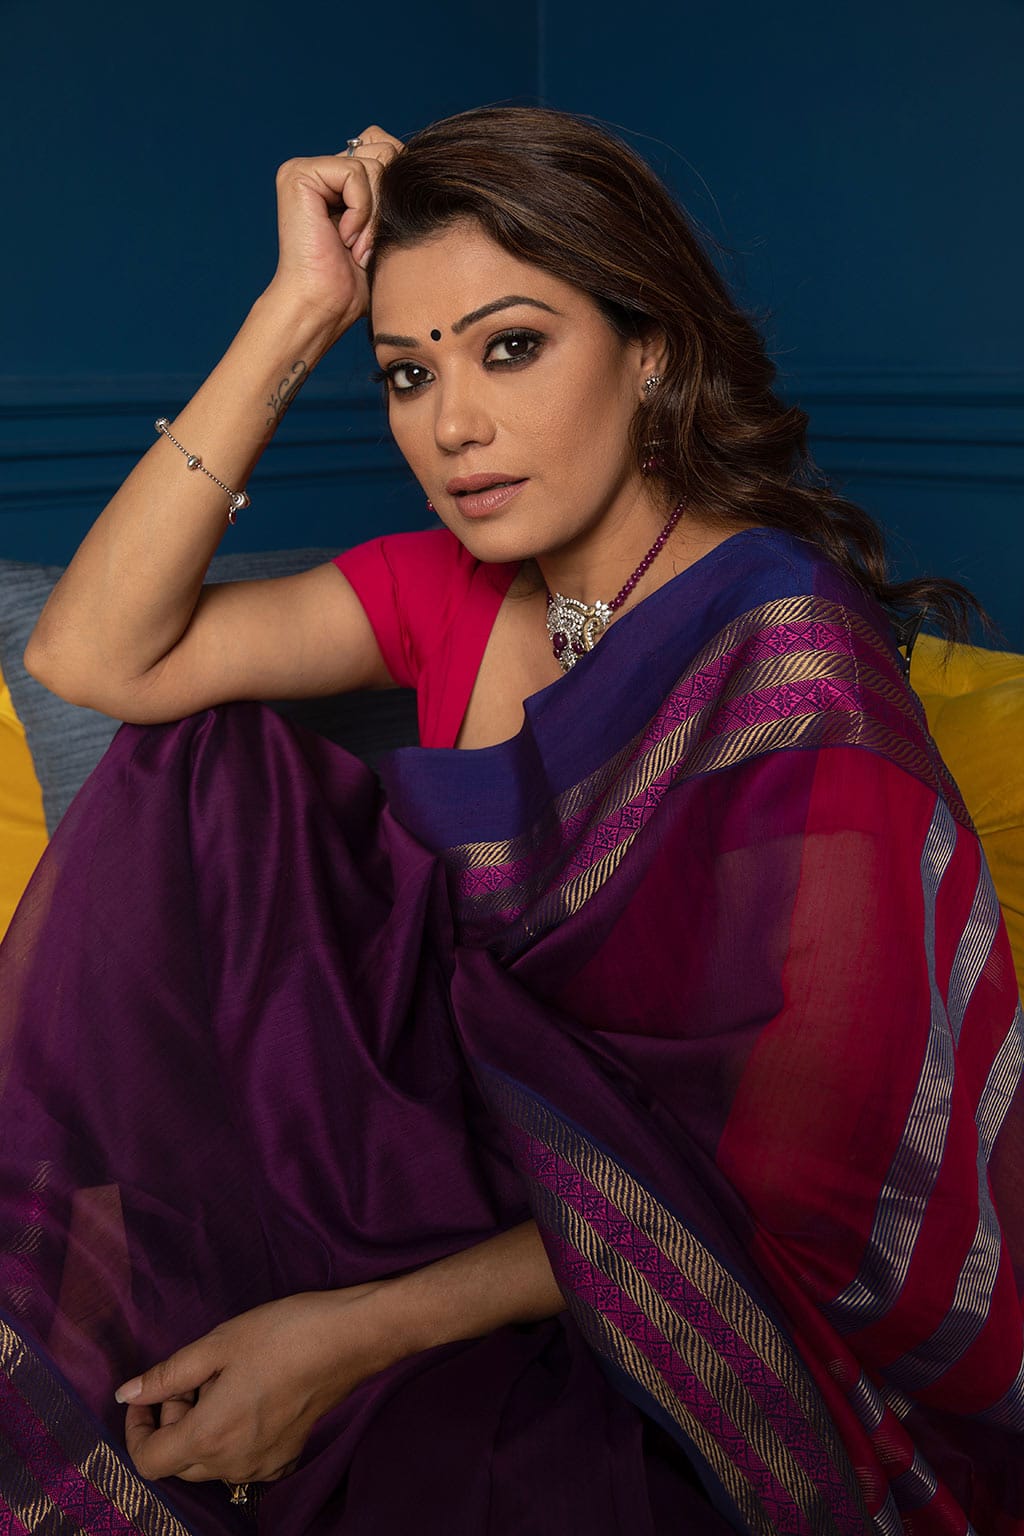 Glammrous Royal blue with rani pink thread temple design border - Kolkata  soft cotton sarees